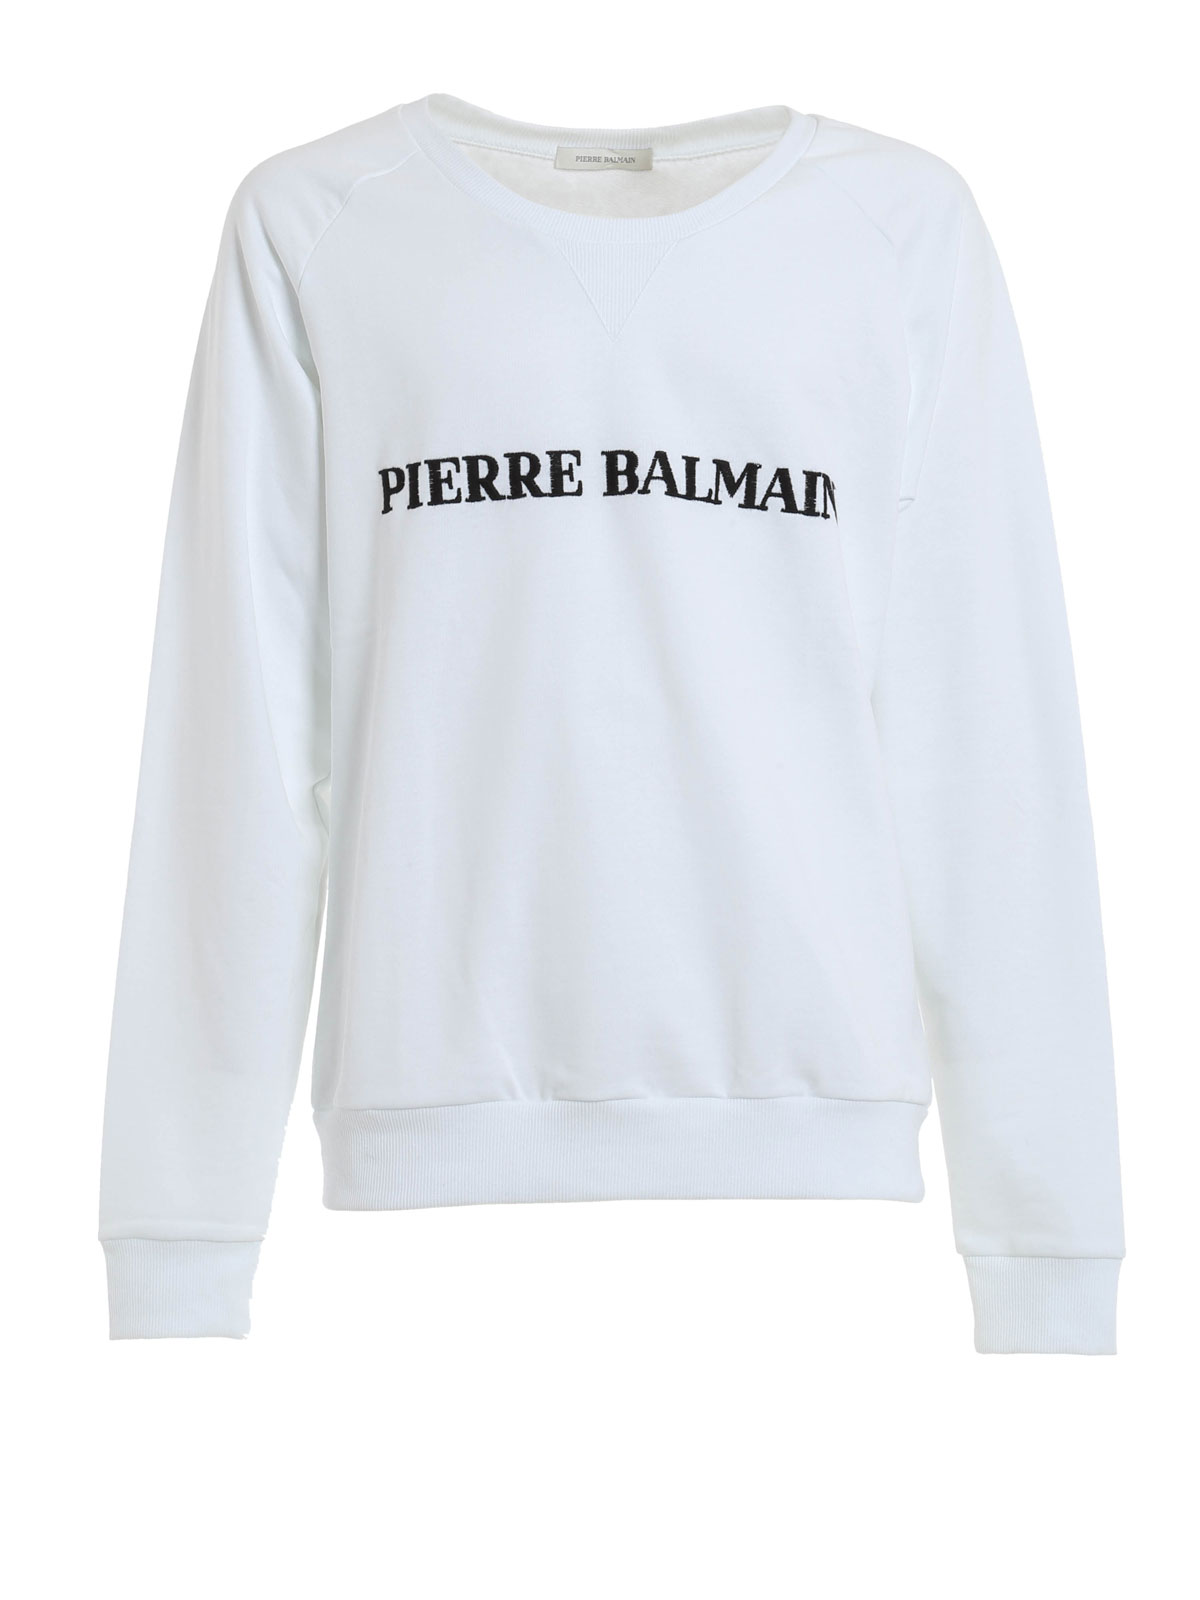 satire Oprecht Kruipen Sweatshirts & Sweaters Pierre Balmain - Crew neck sweater with logo -  HP6380S1380